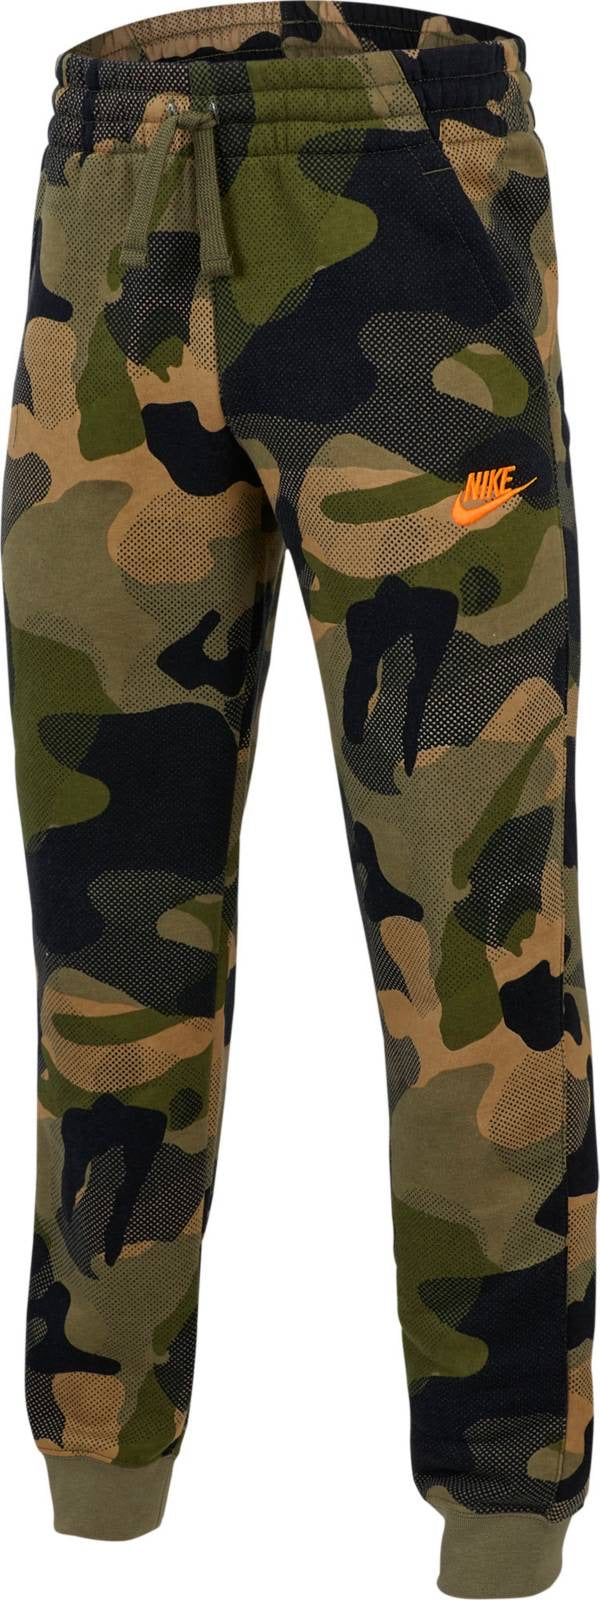 Nike camo jogging pants